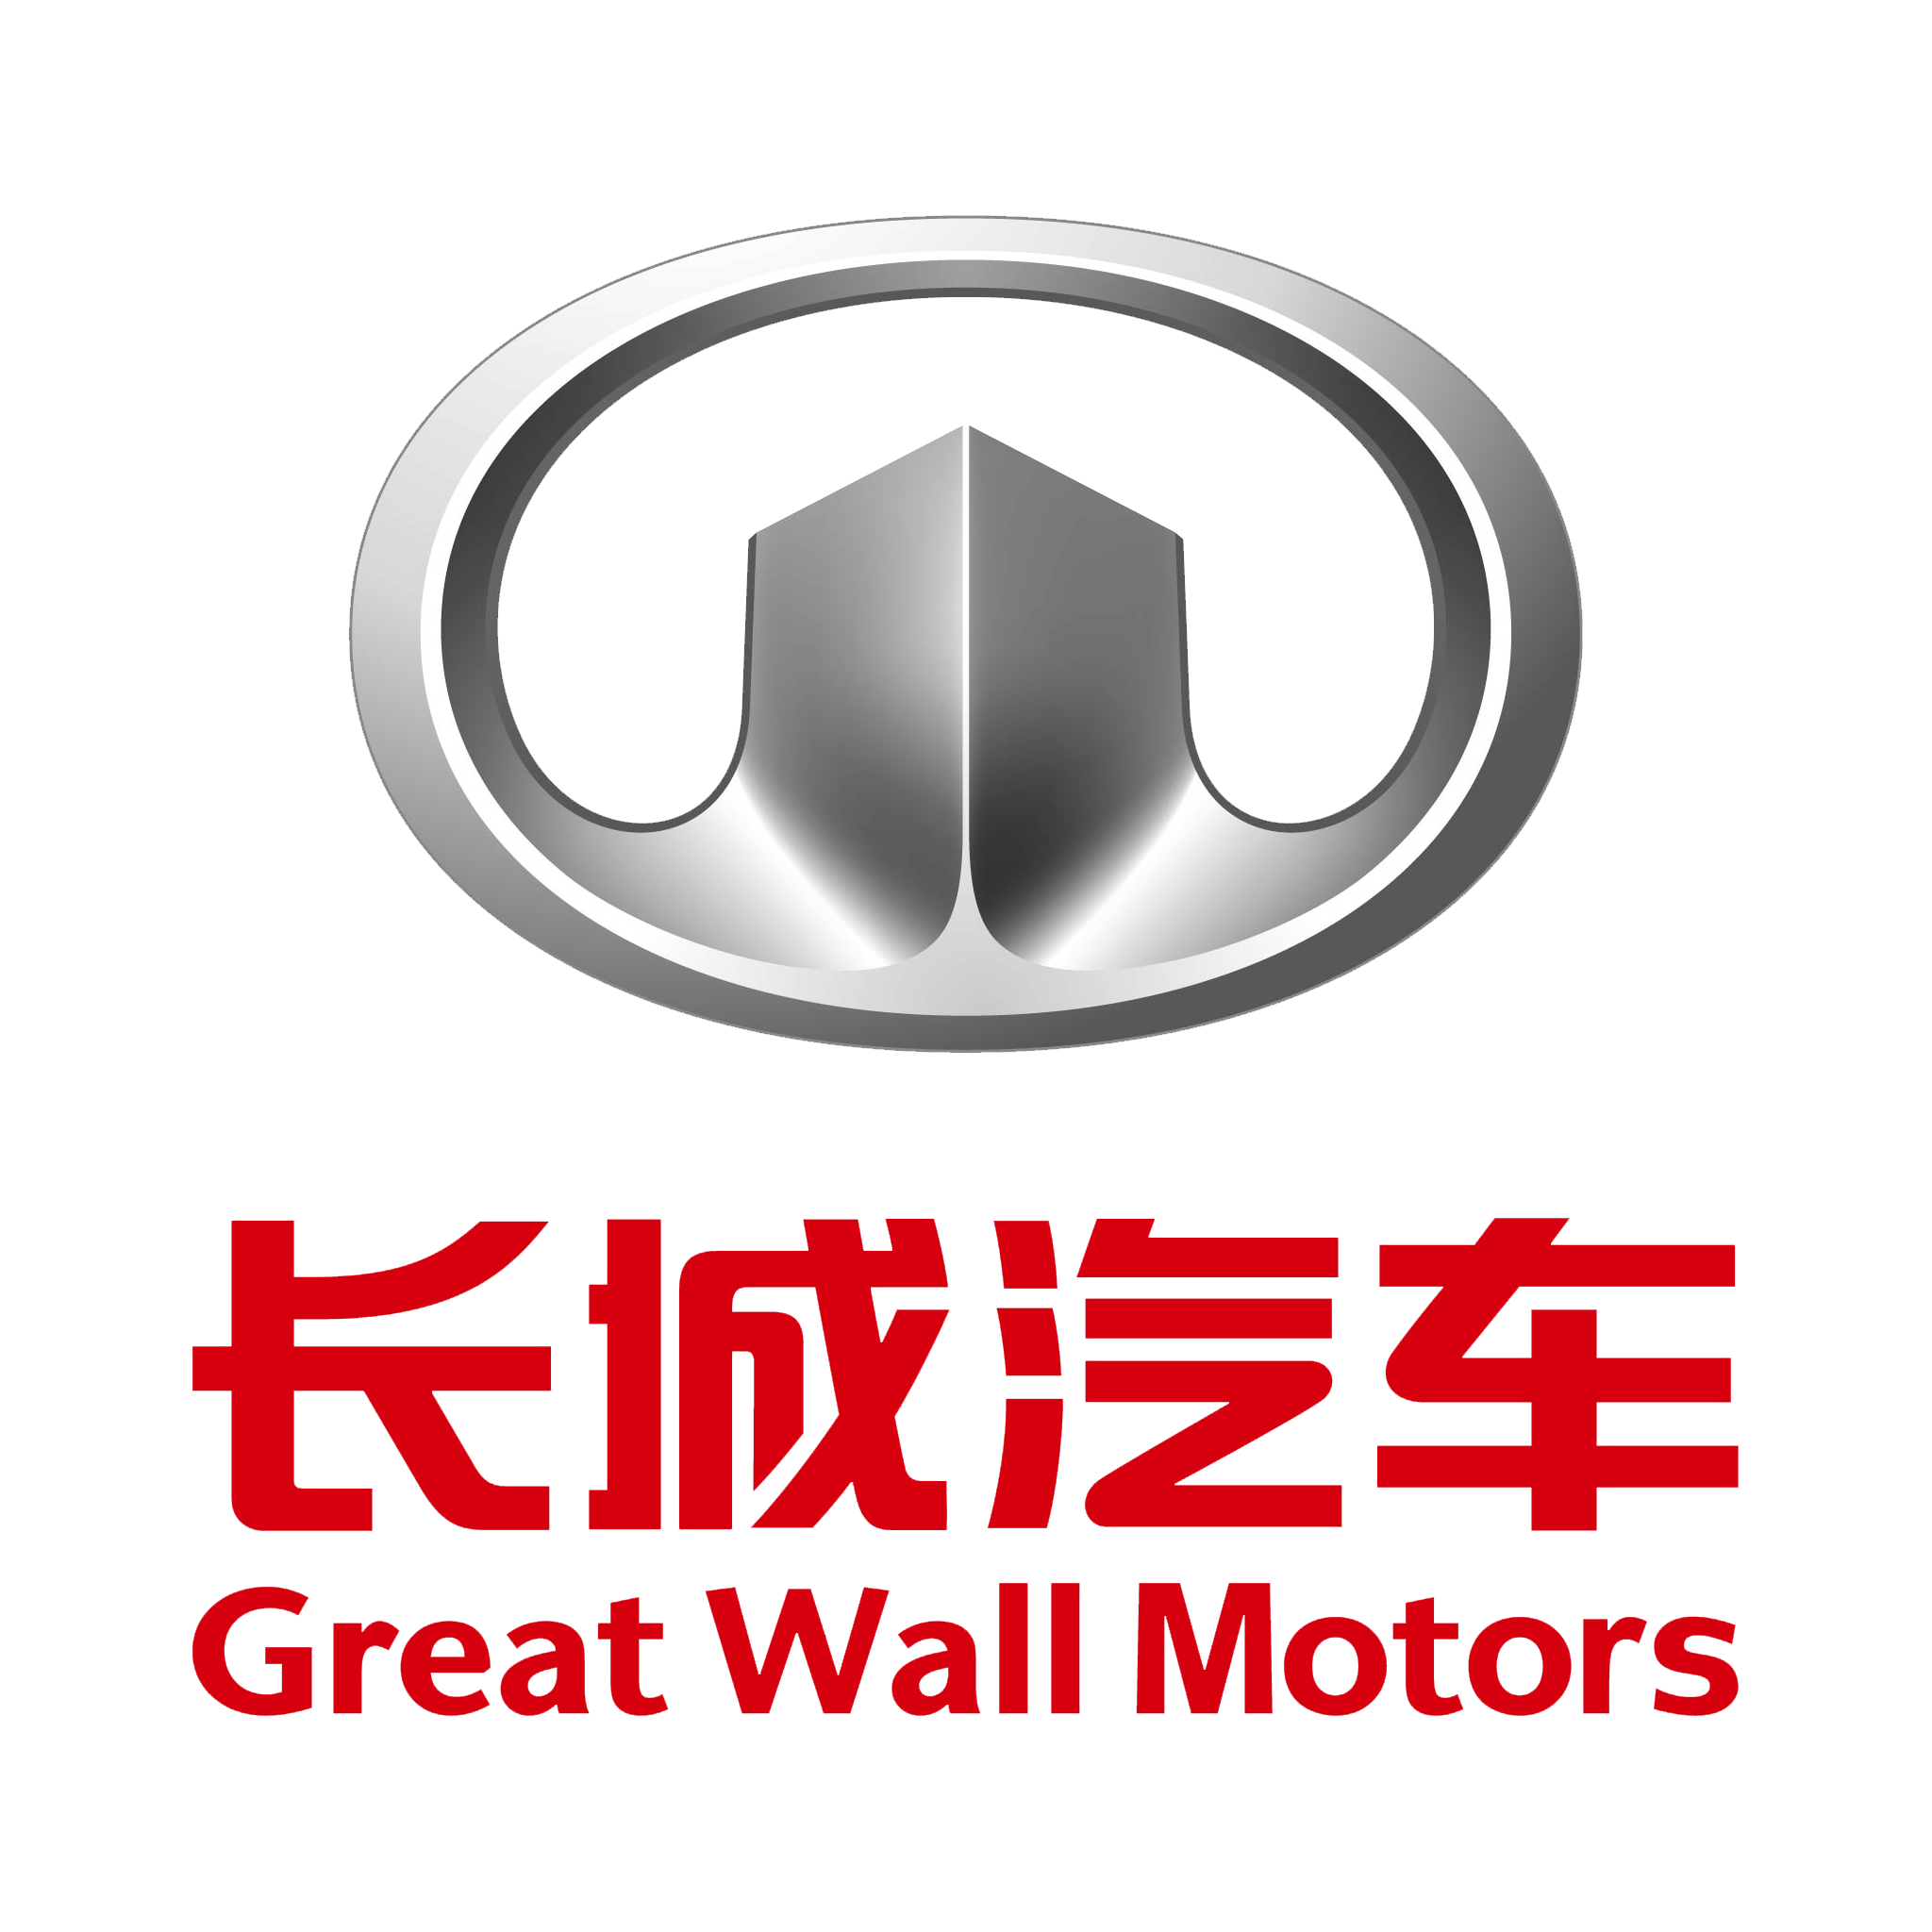 Great Wall Motors Brand Logo